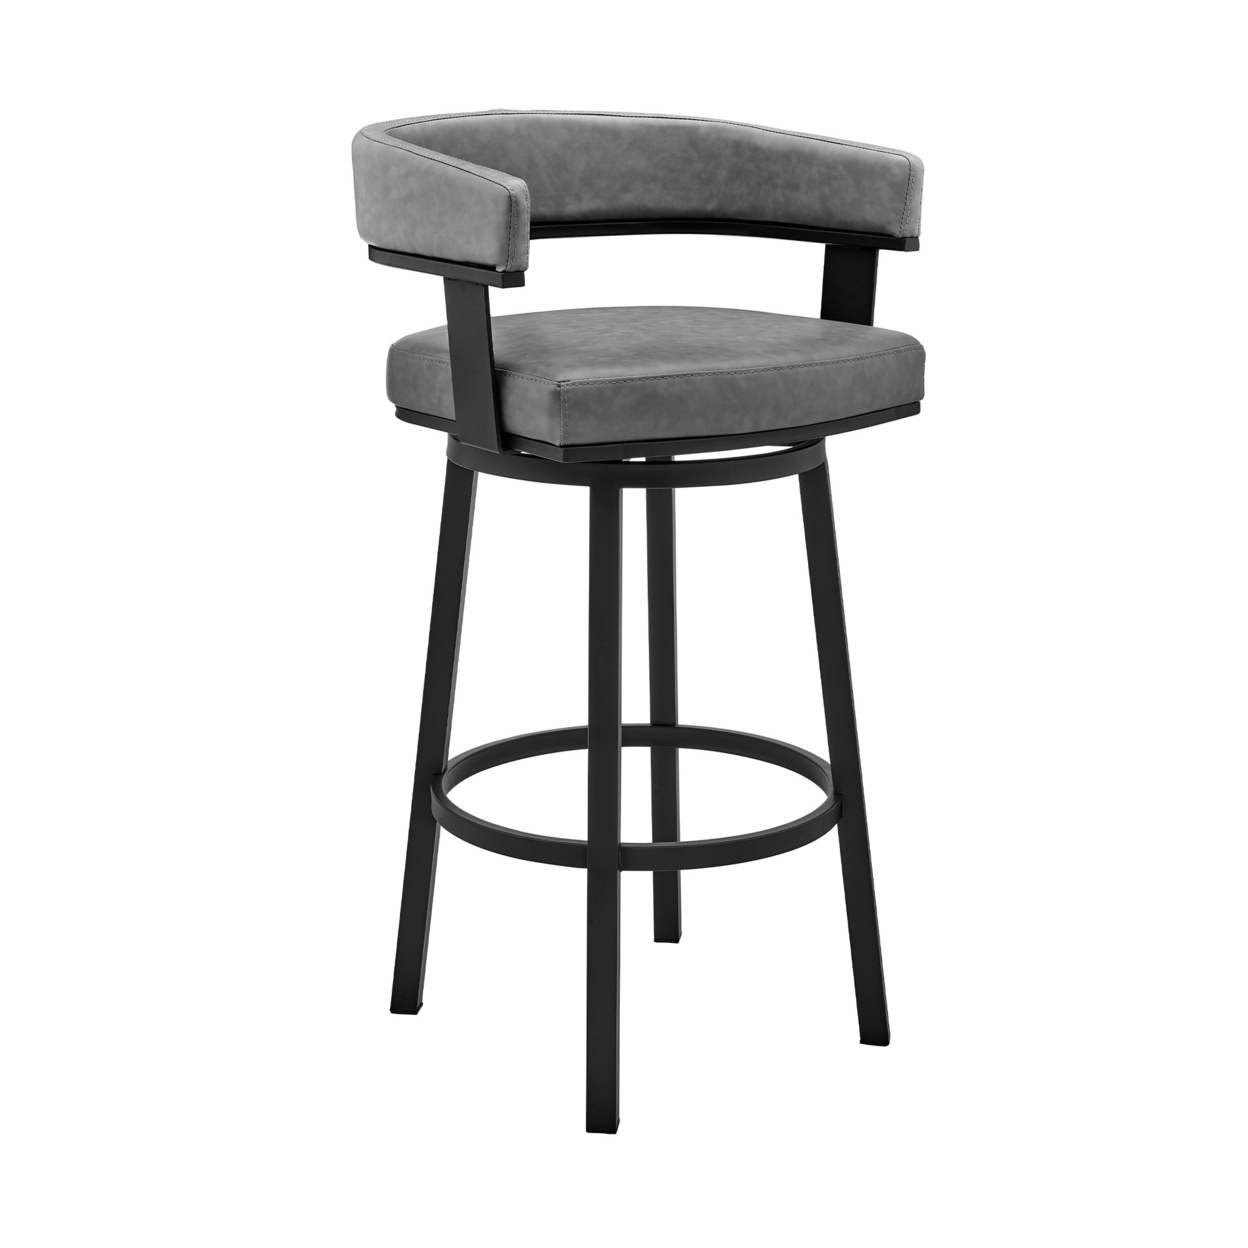 Jack 26 Inch Counter Height Bar Stool, Swivel Chair, Faux Leather, Gray- Saltoro Sherpi